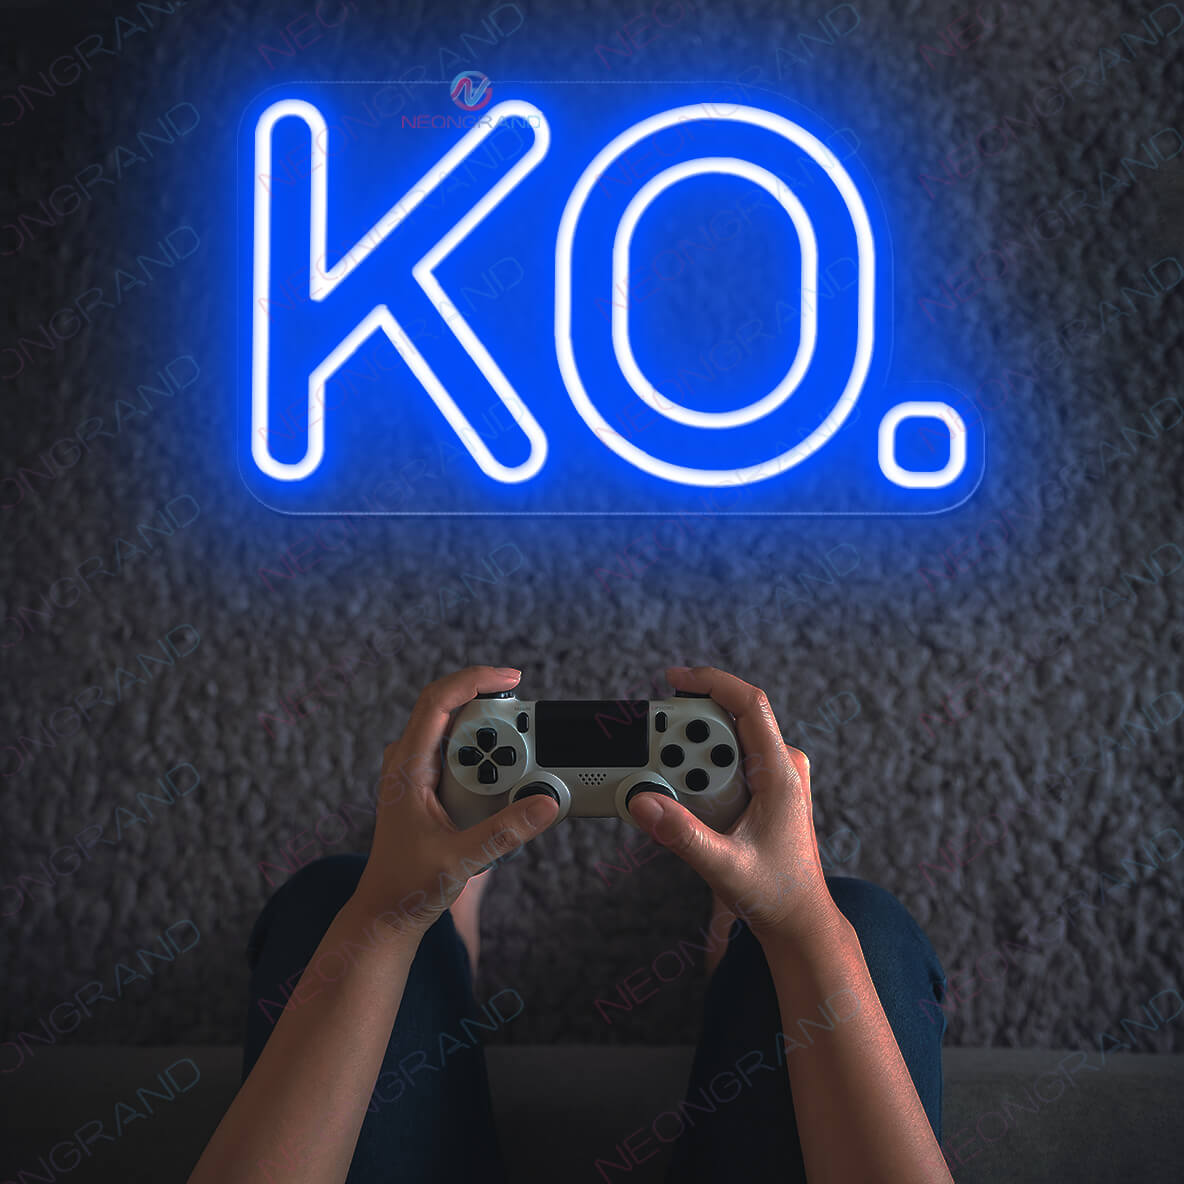 Gaming Neon Signs KO Game Led Light blue